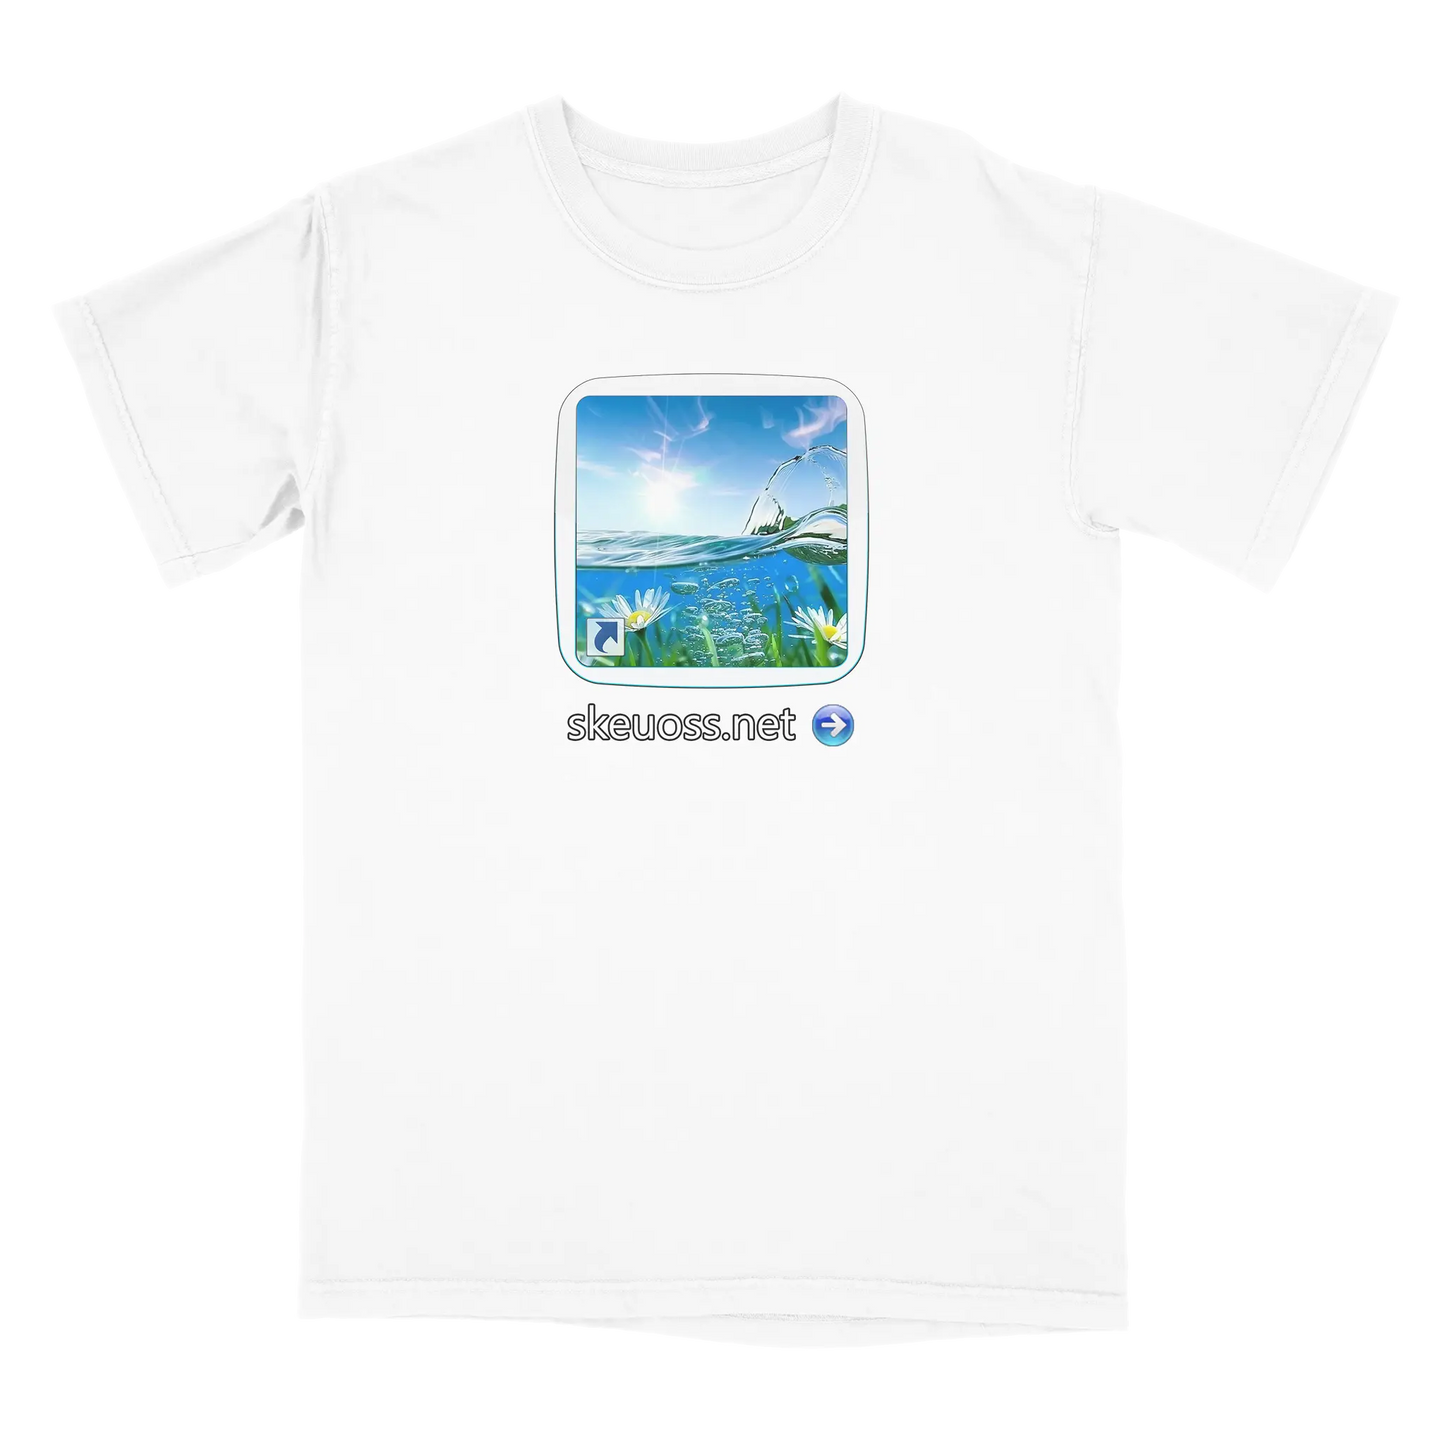 Frutiger Aero T-shirt - User Login Collection - User 337